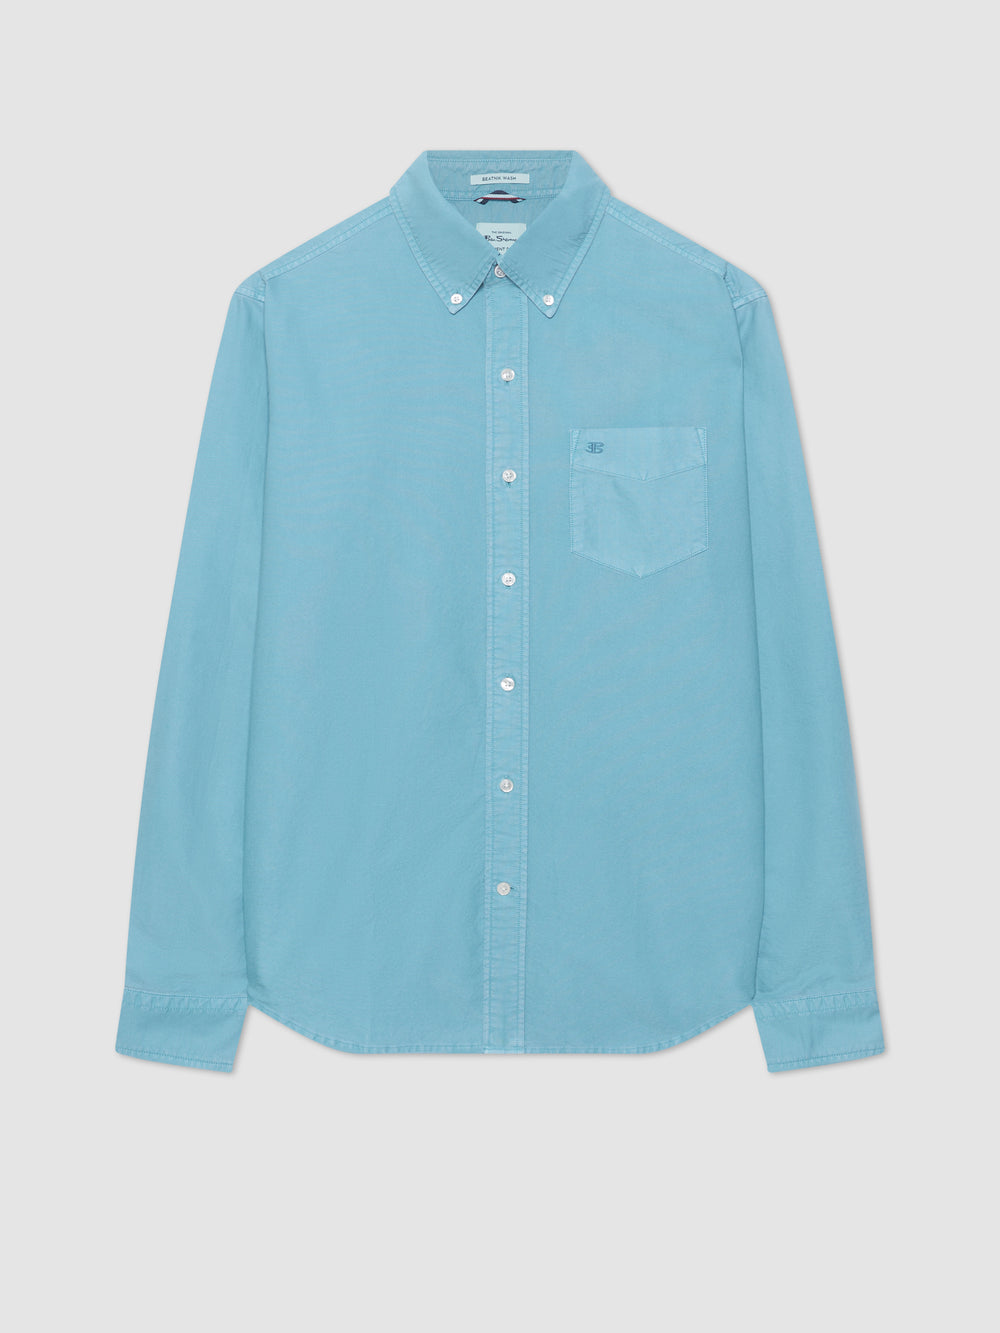 Beatnik Oxford Garment Dye Shirt - Deep Teal Blue - Ben Sherman